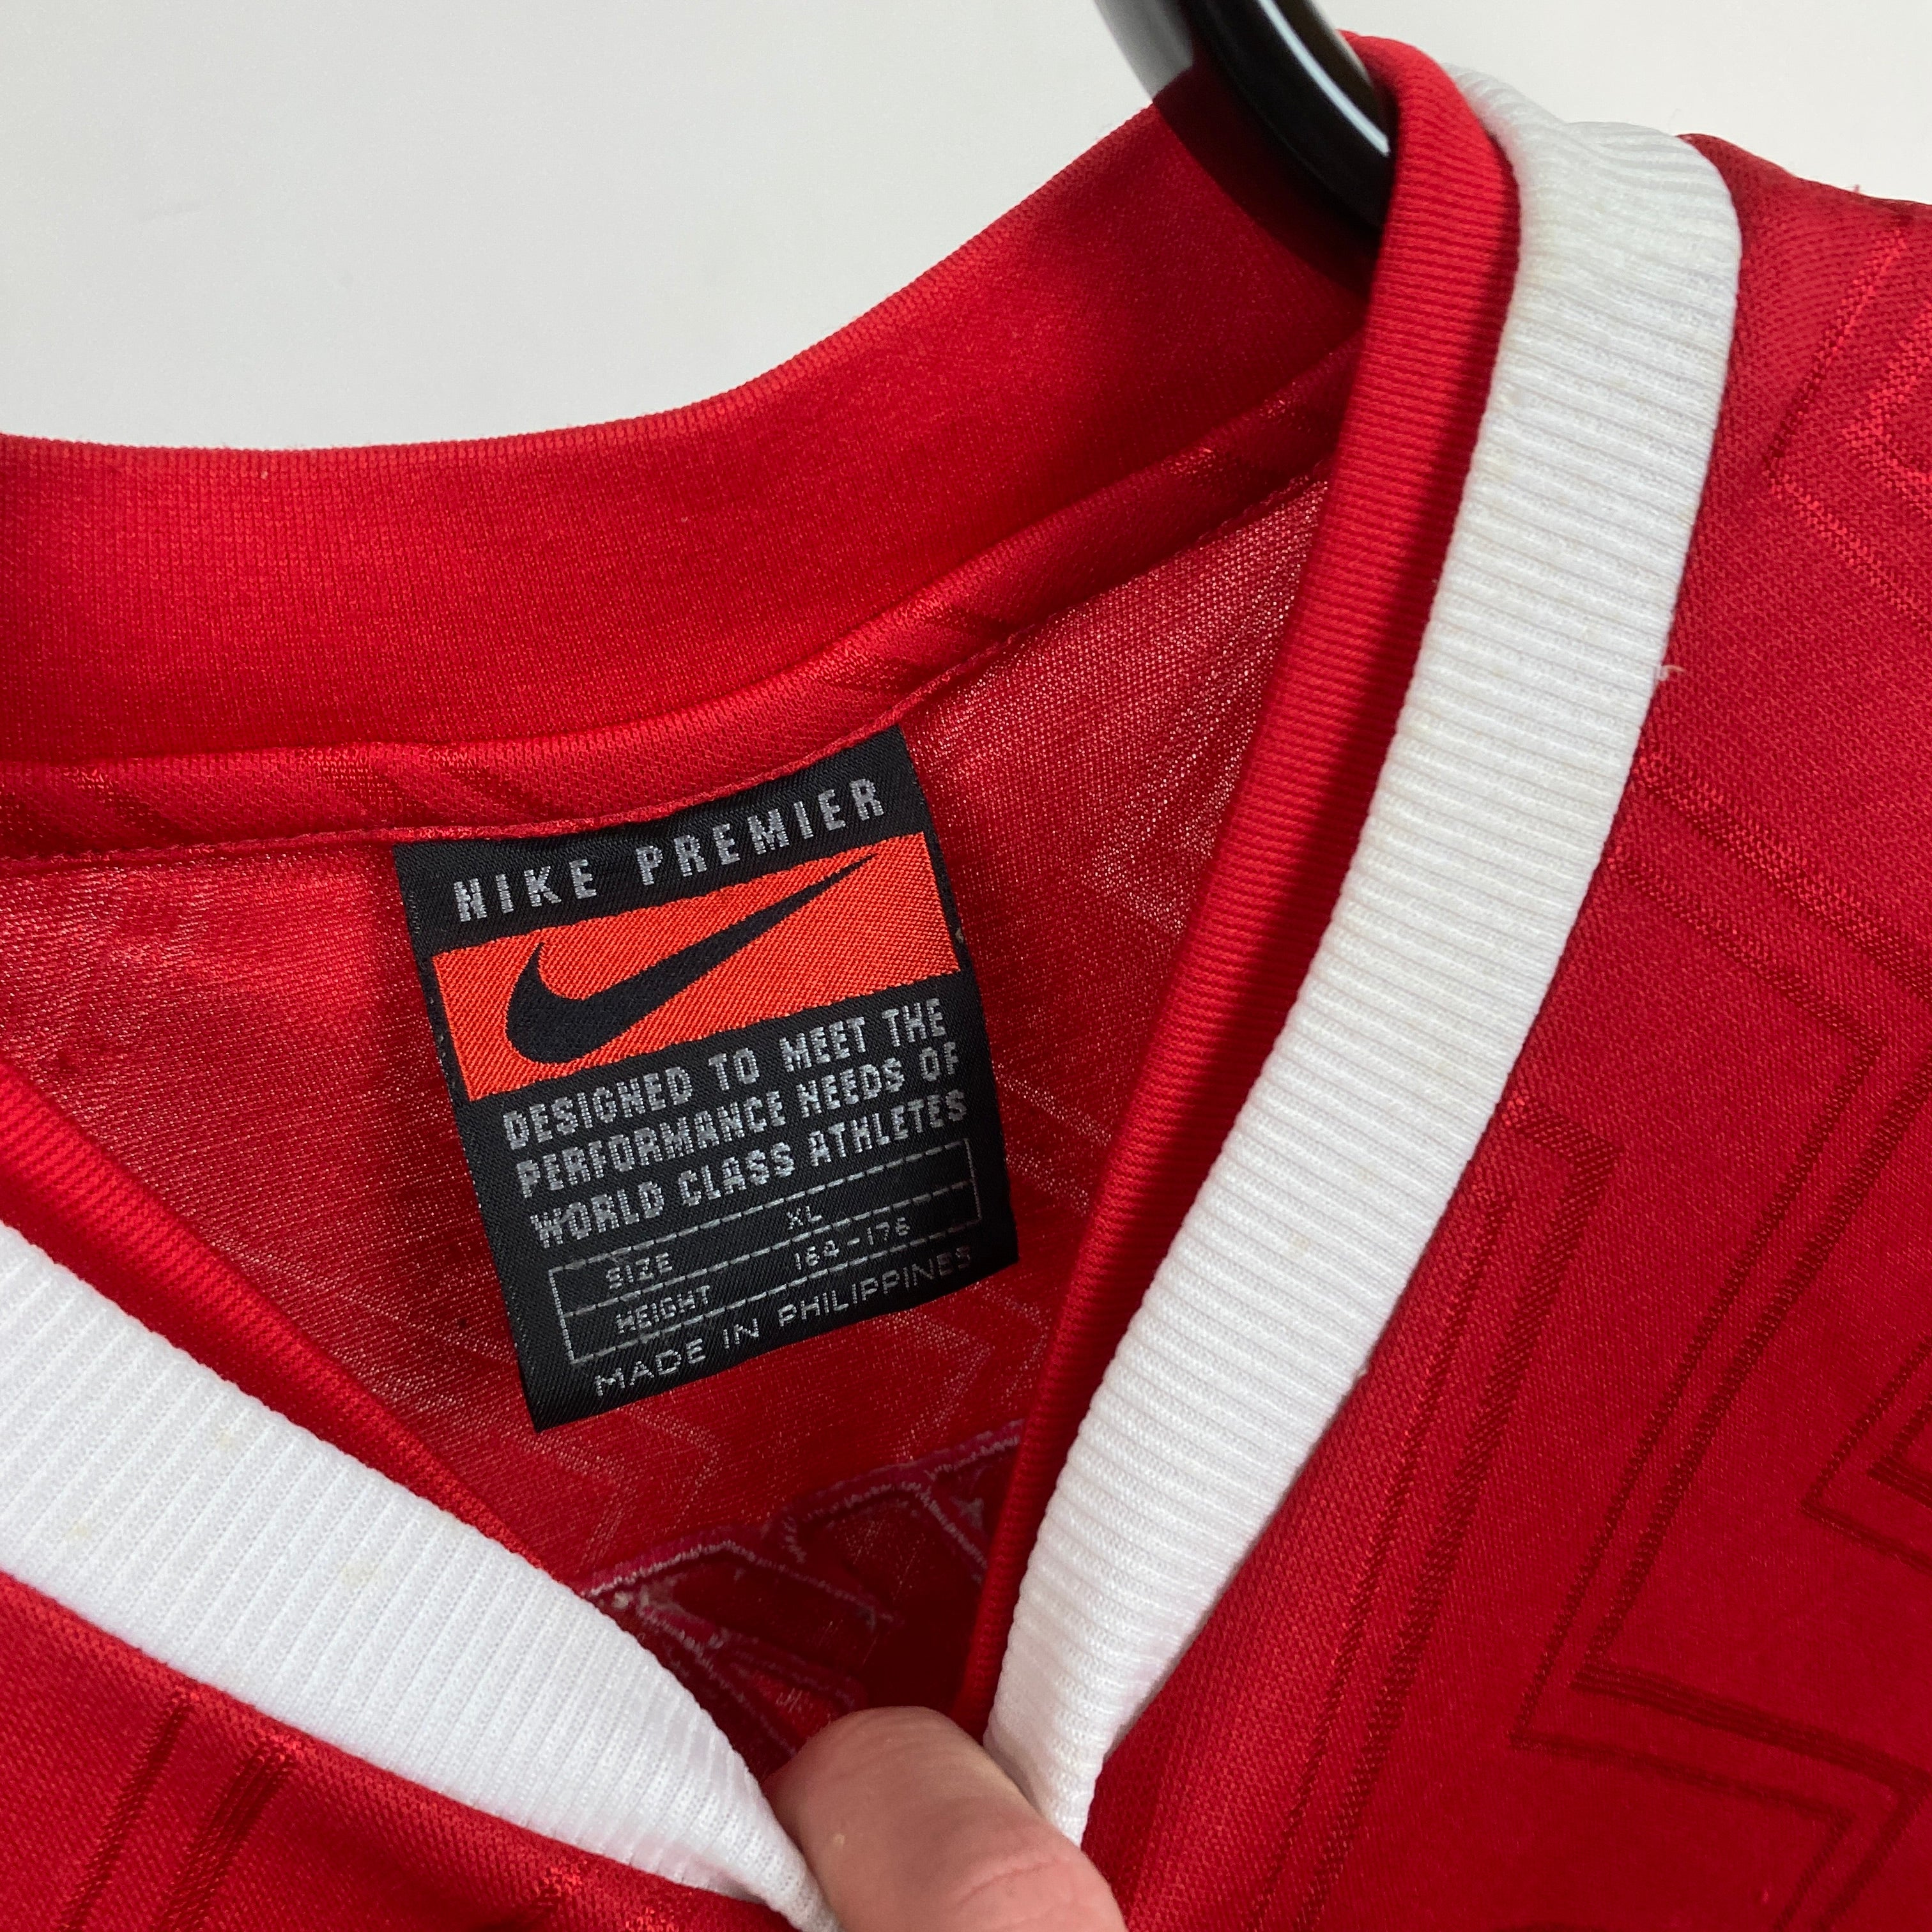 90s Nike Arsenal Football Shirt T-Shirt Red Small